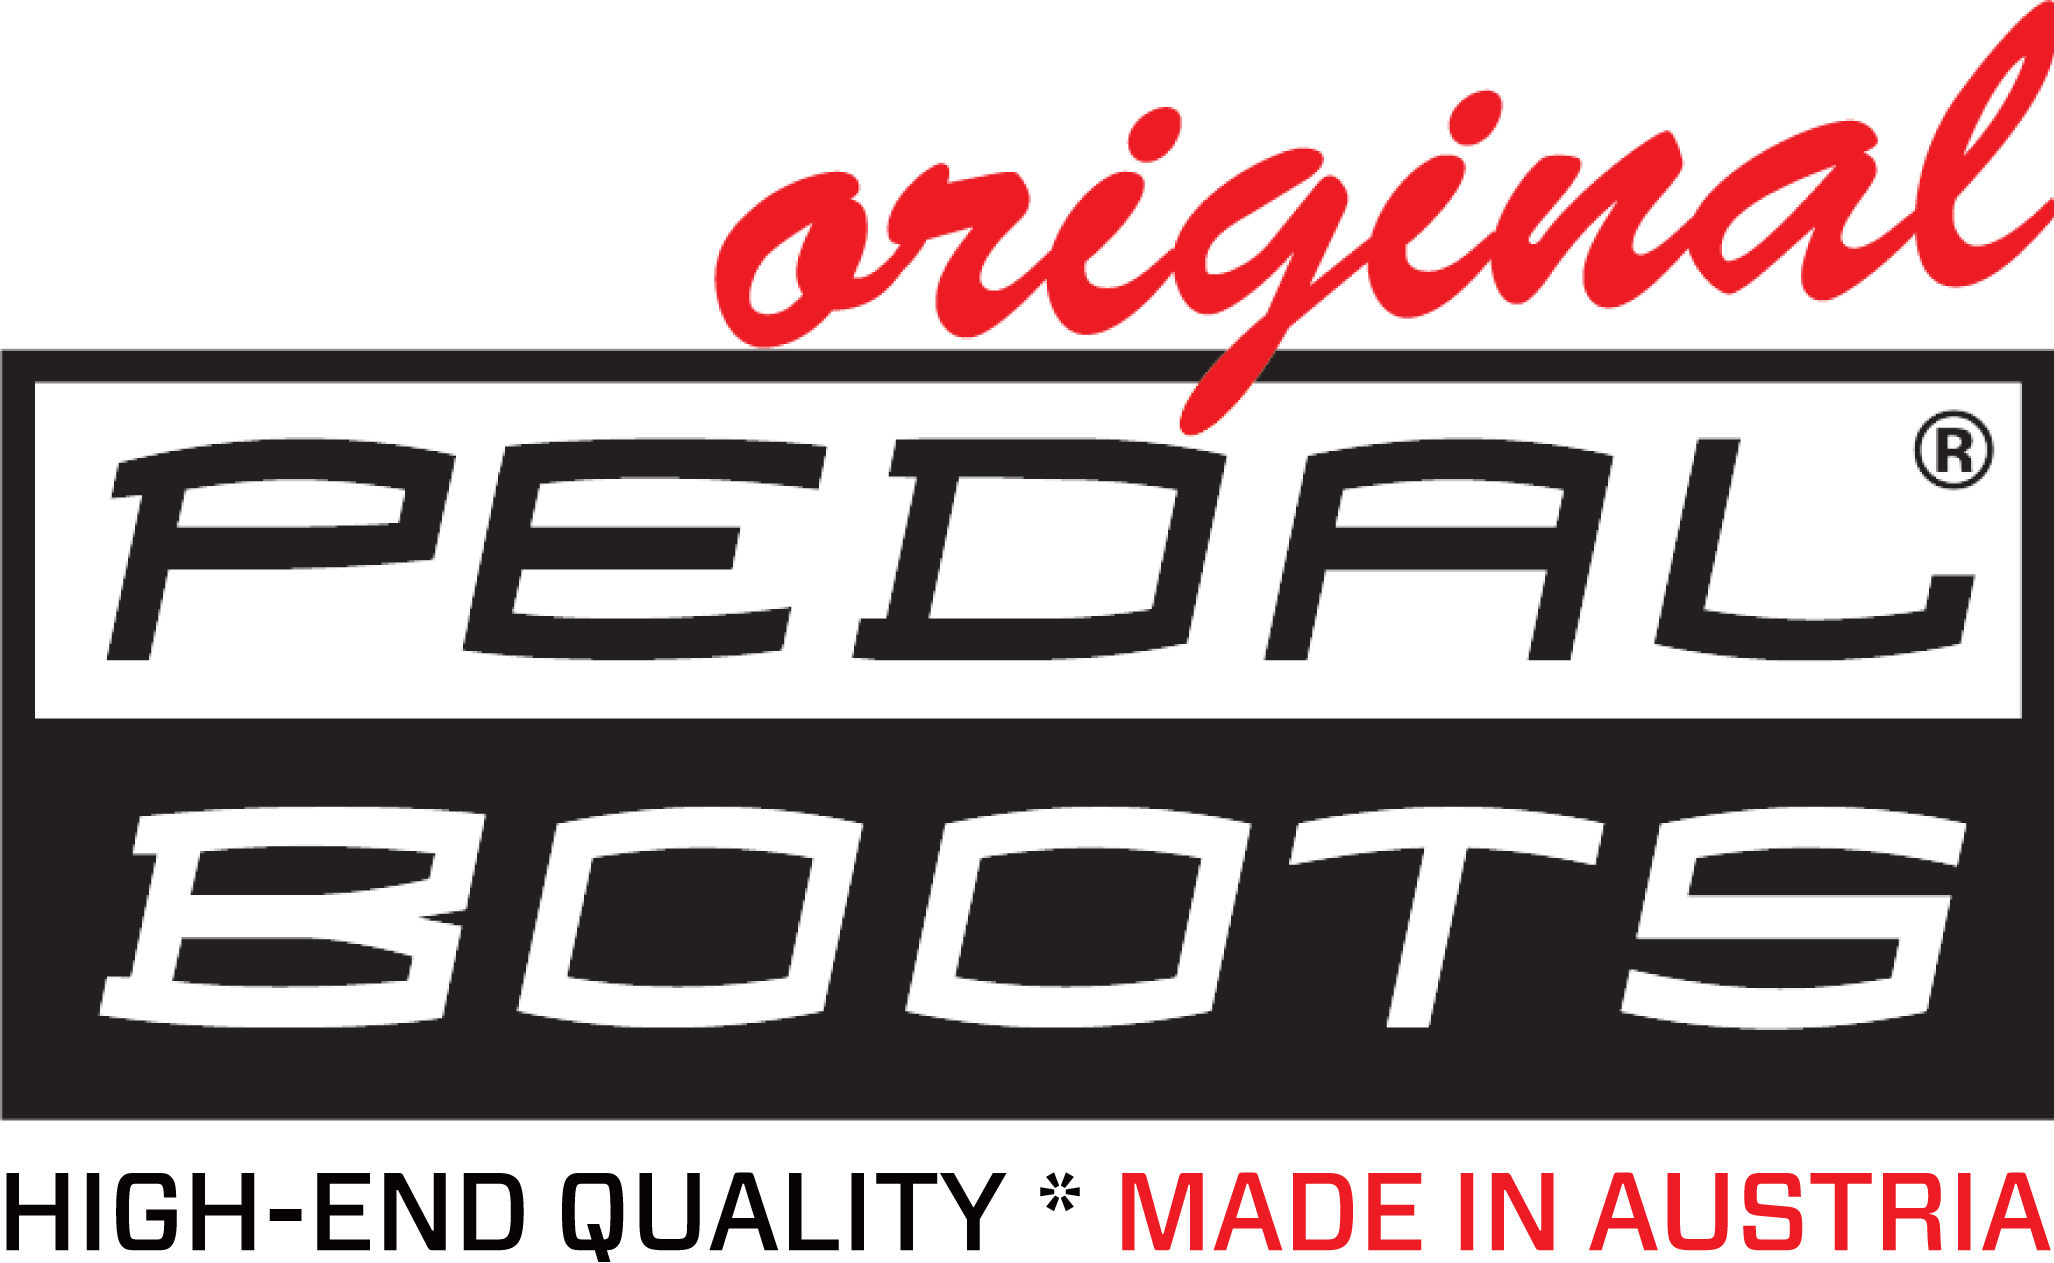 pedalboots